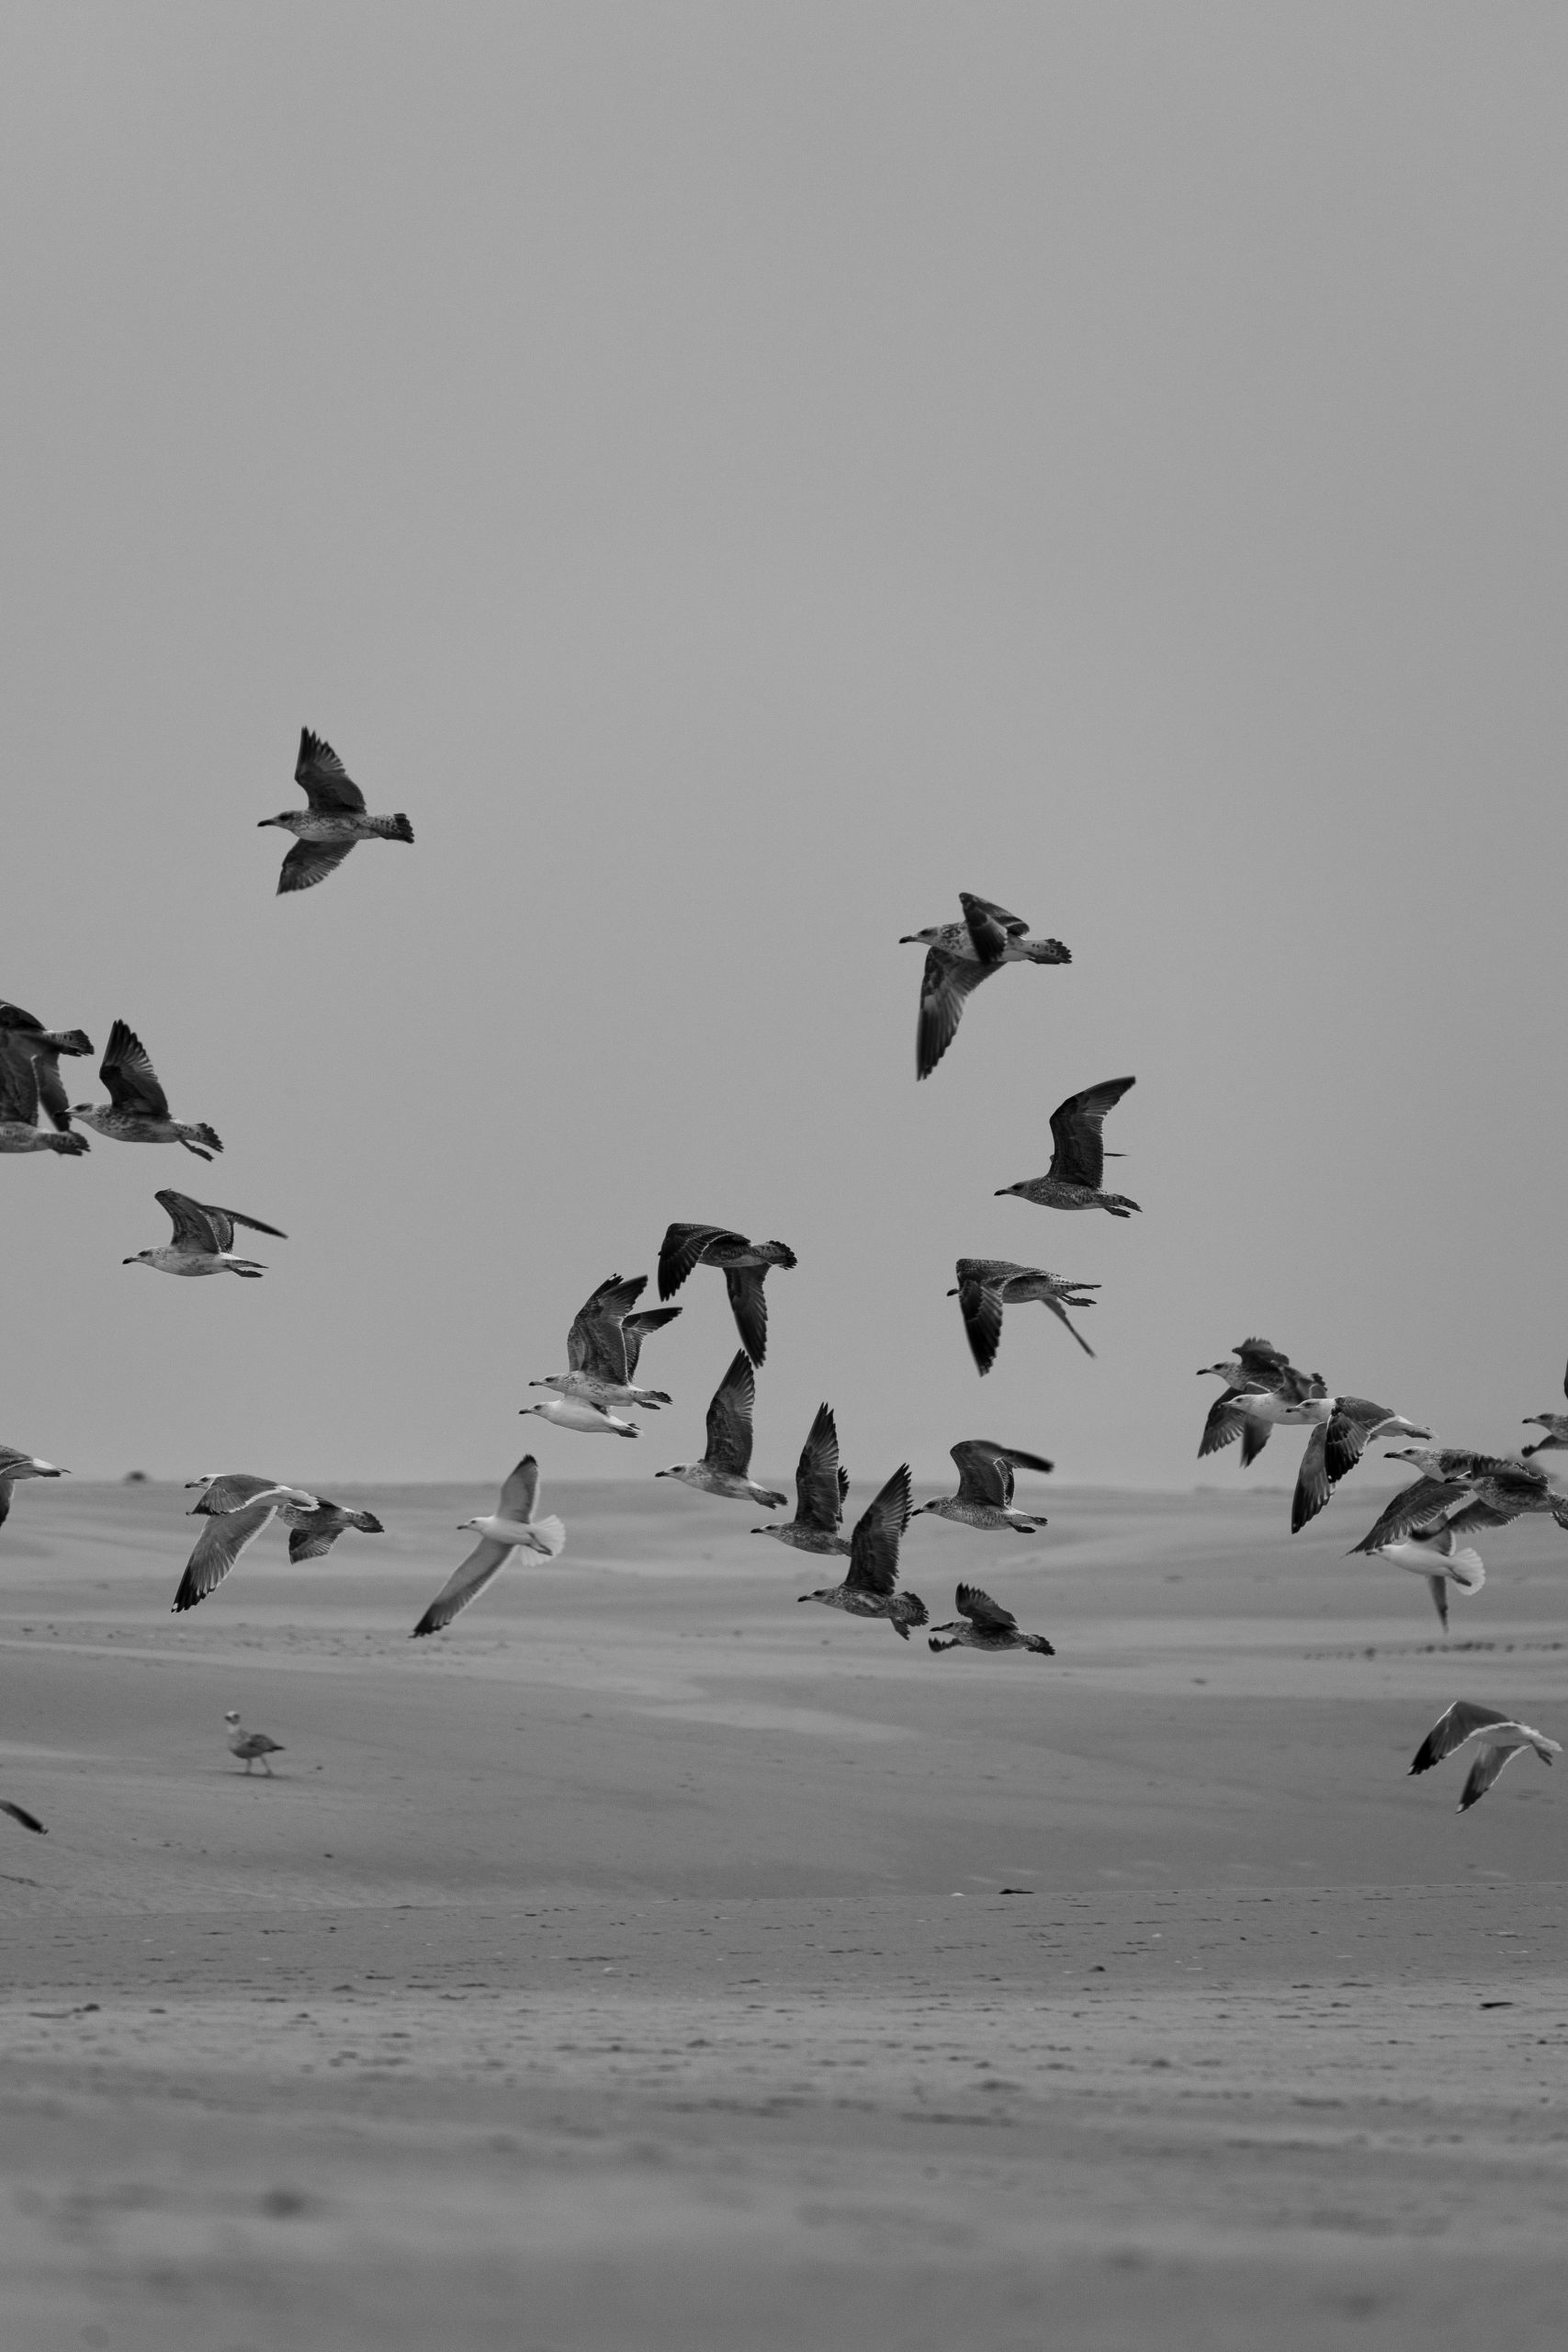 gaivotas a voar na praia